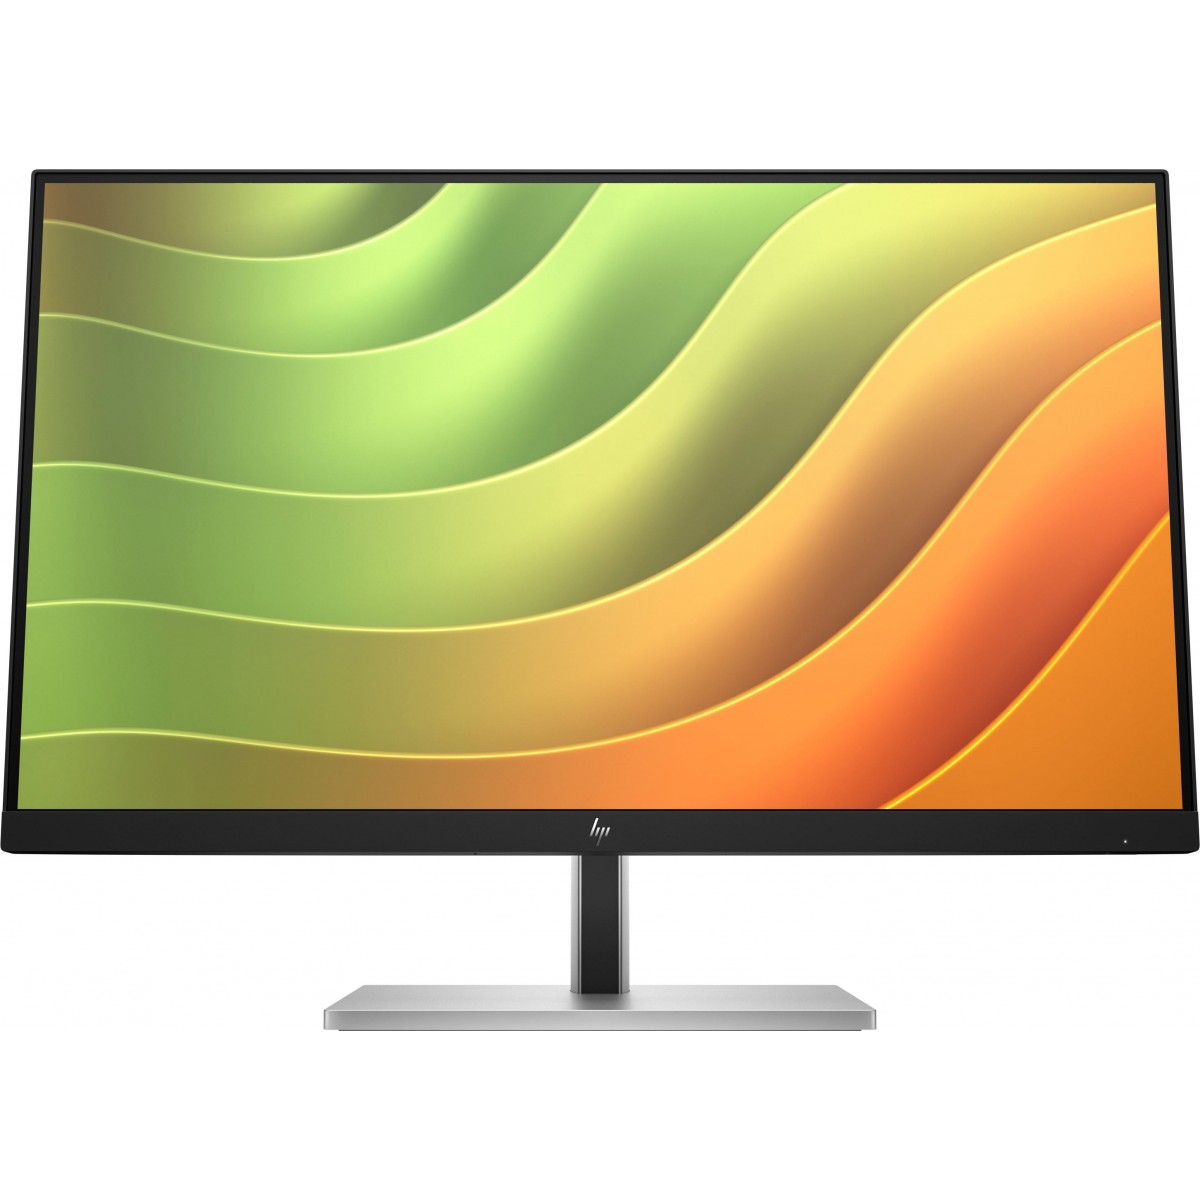 HP LCD E24u G5 23.8 1920x1080, IPS w-LED micro-edge, 250 cd-m2, 1000:1, 5 ms g-g,DP 1.2,HDMI 1.4,USB3.2 4x, USB-C,RJ-45